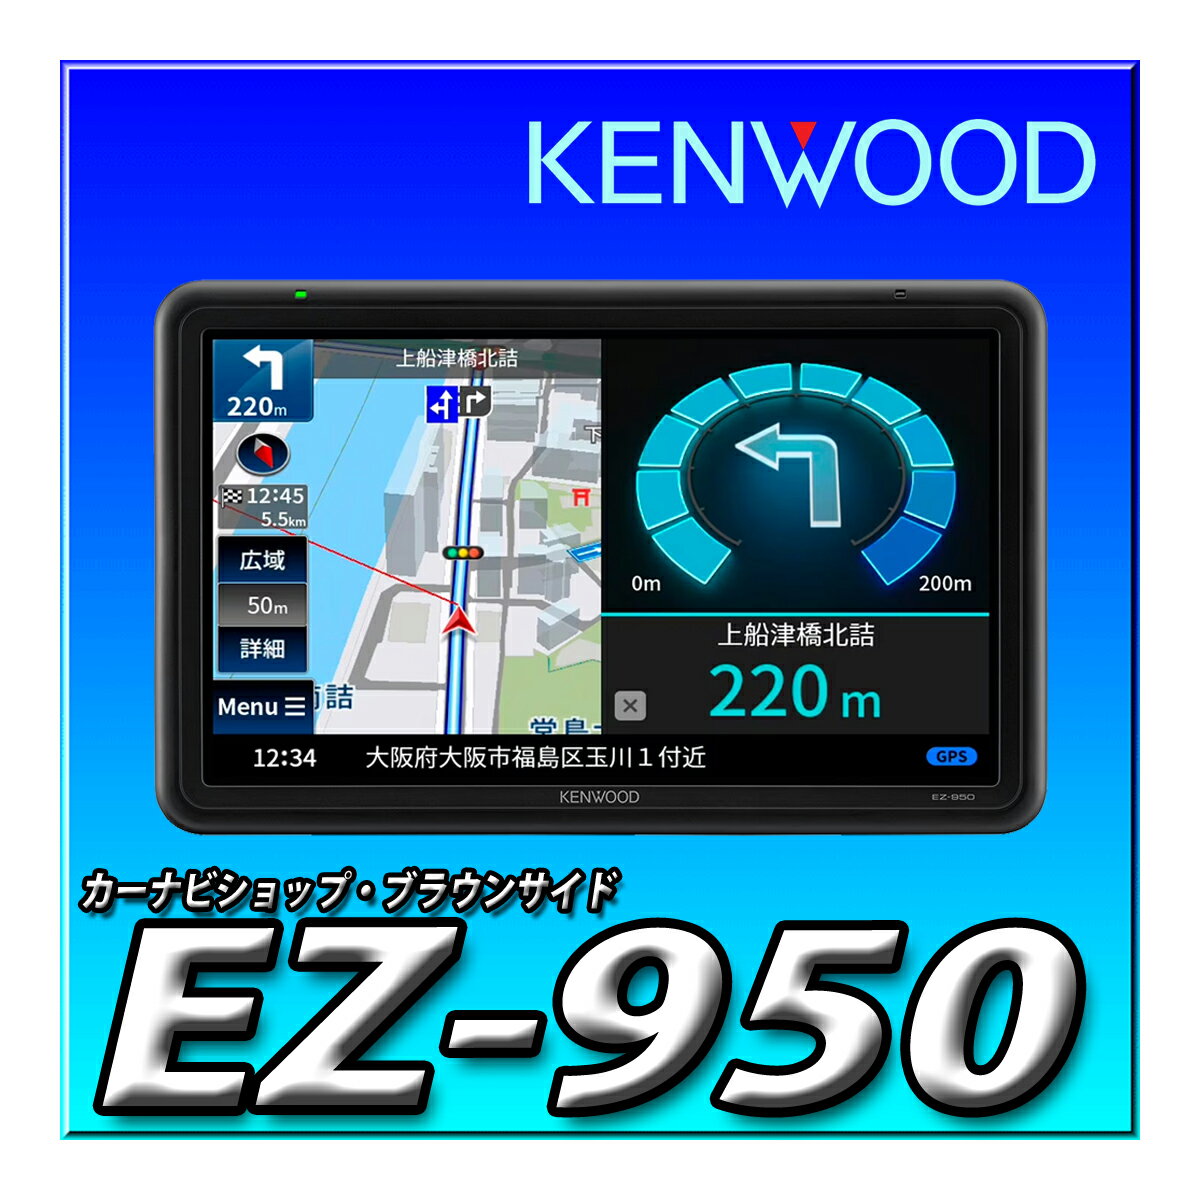 EZ-950 ケンウッド ポータブルナビ 9インチ フルセグ地デジチューナー 衛星測位システム&3Dセンサーによる高精度自車位置精度 SD再生対応 12V-24V対応